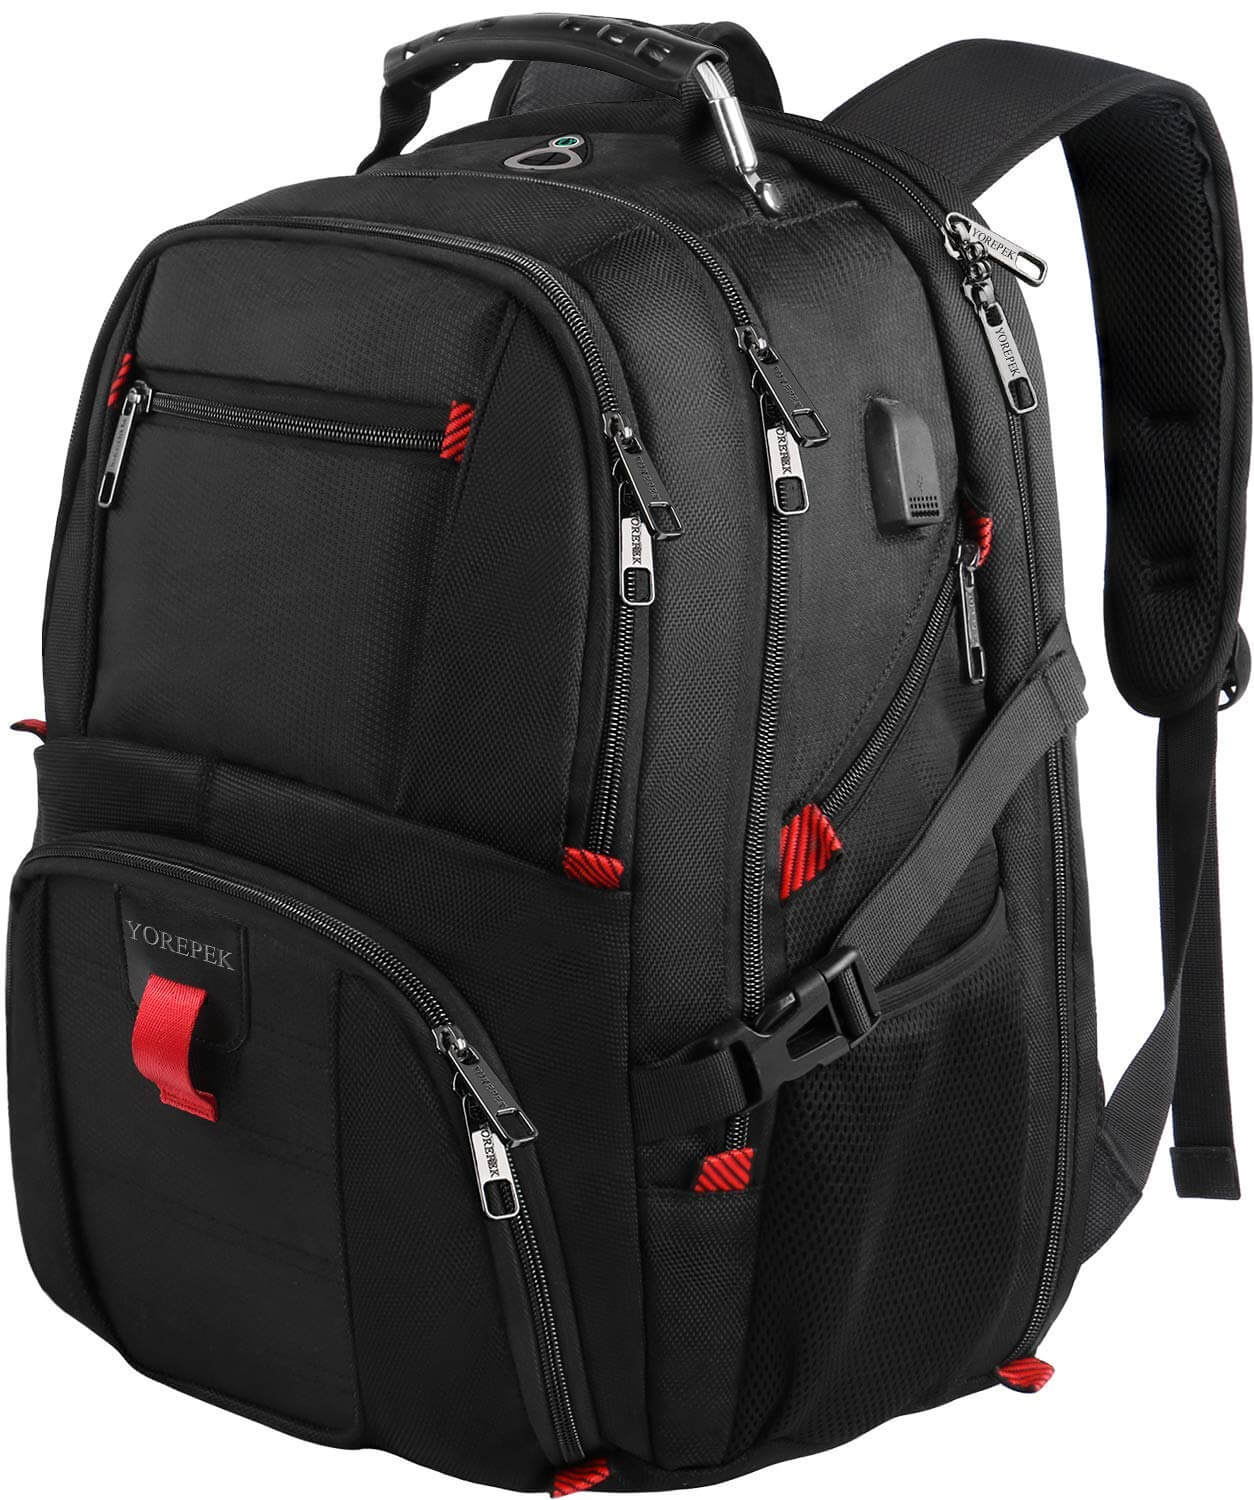 computer accessories travel bag